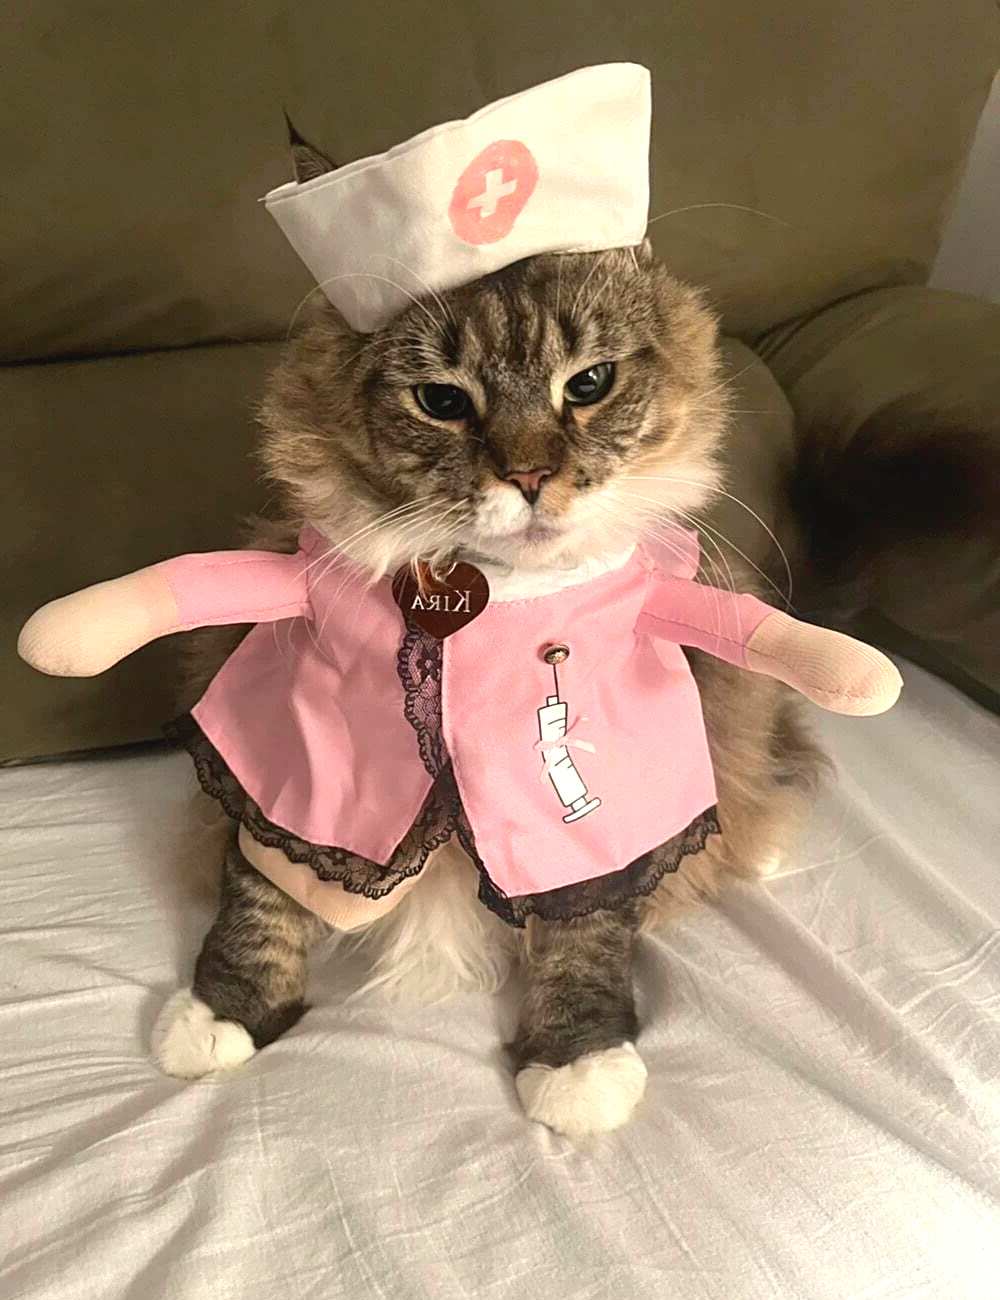 Nurse Old Fashioned Hospital Costume